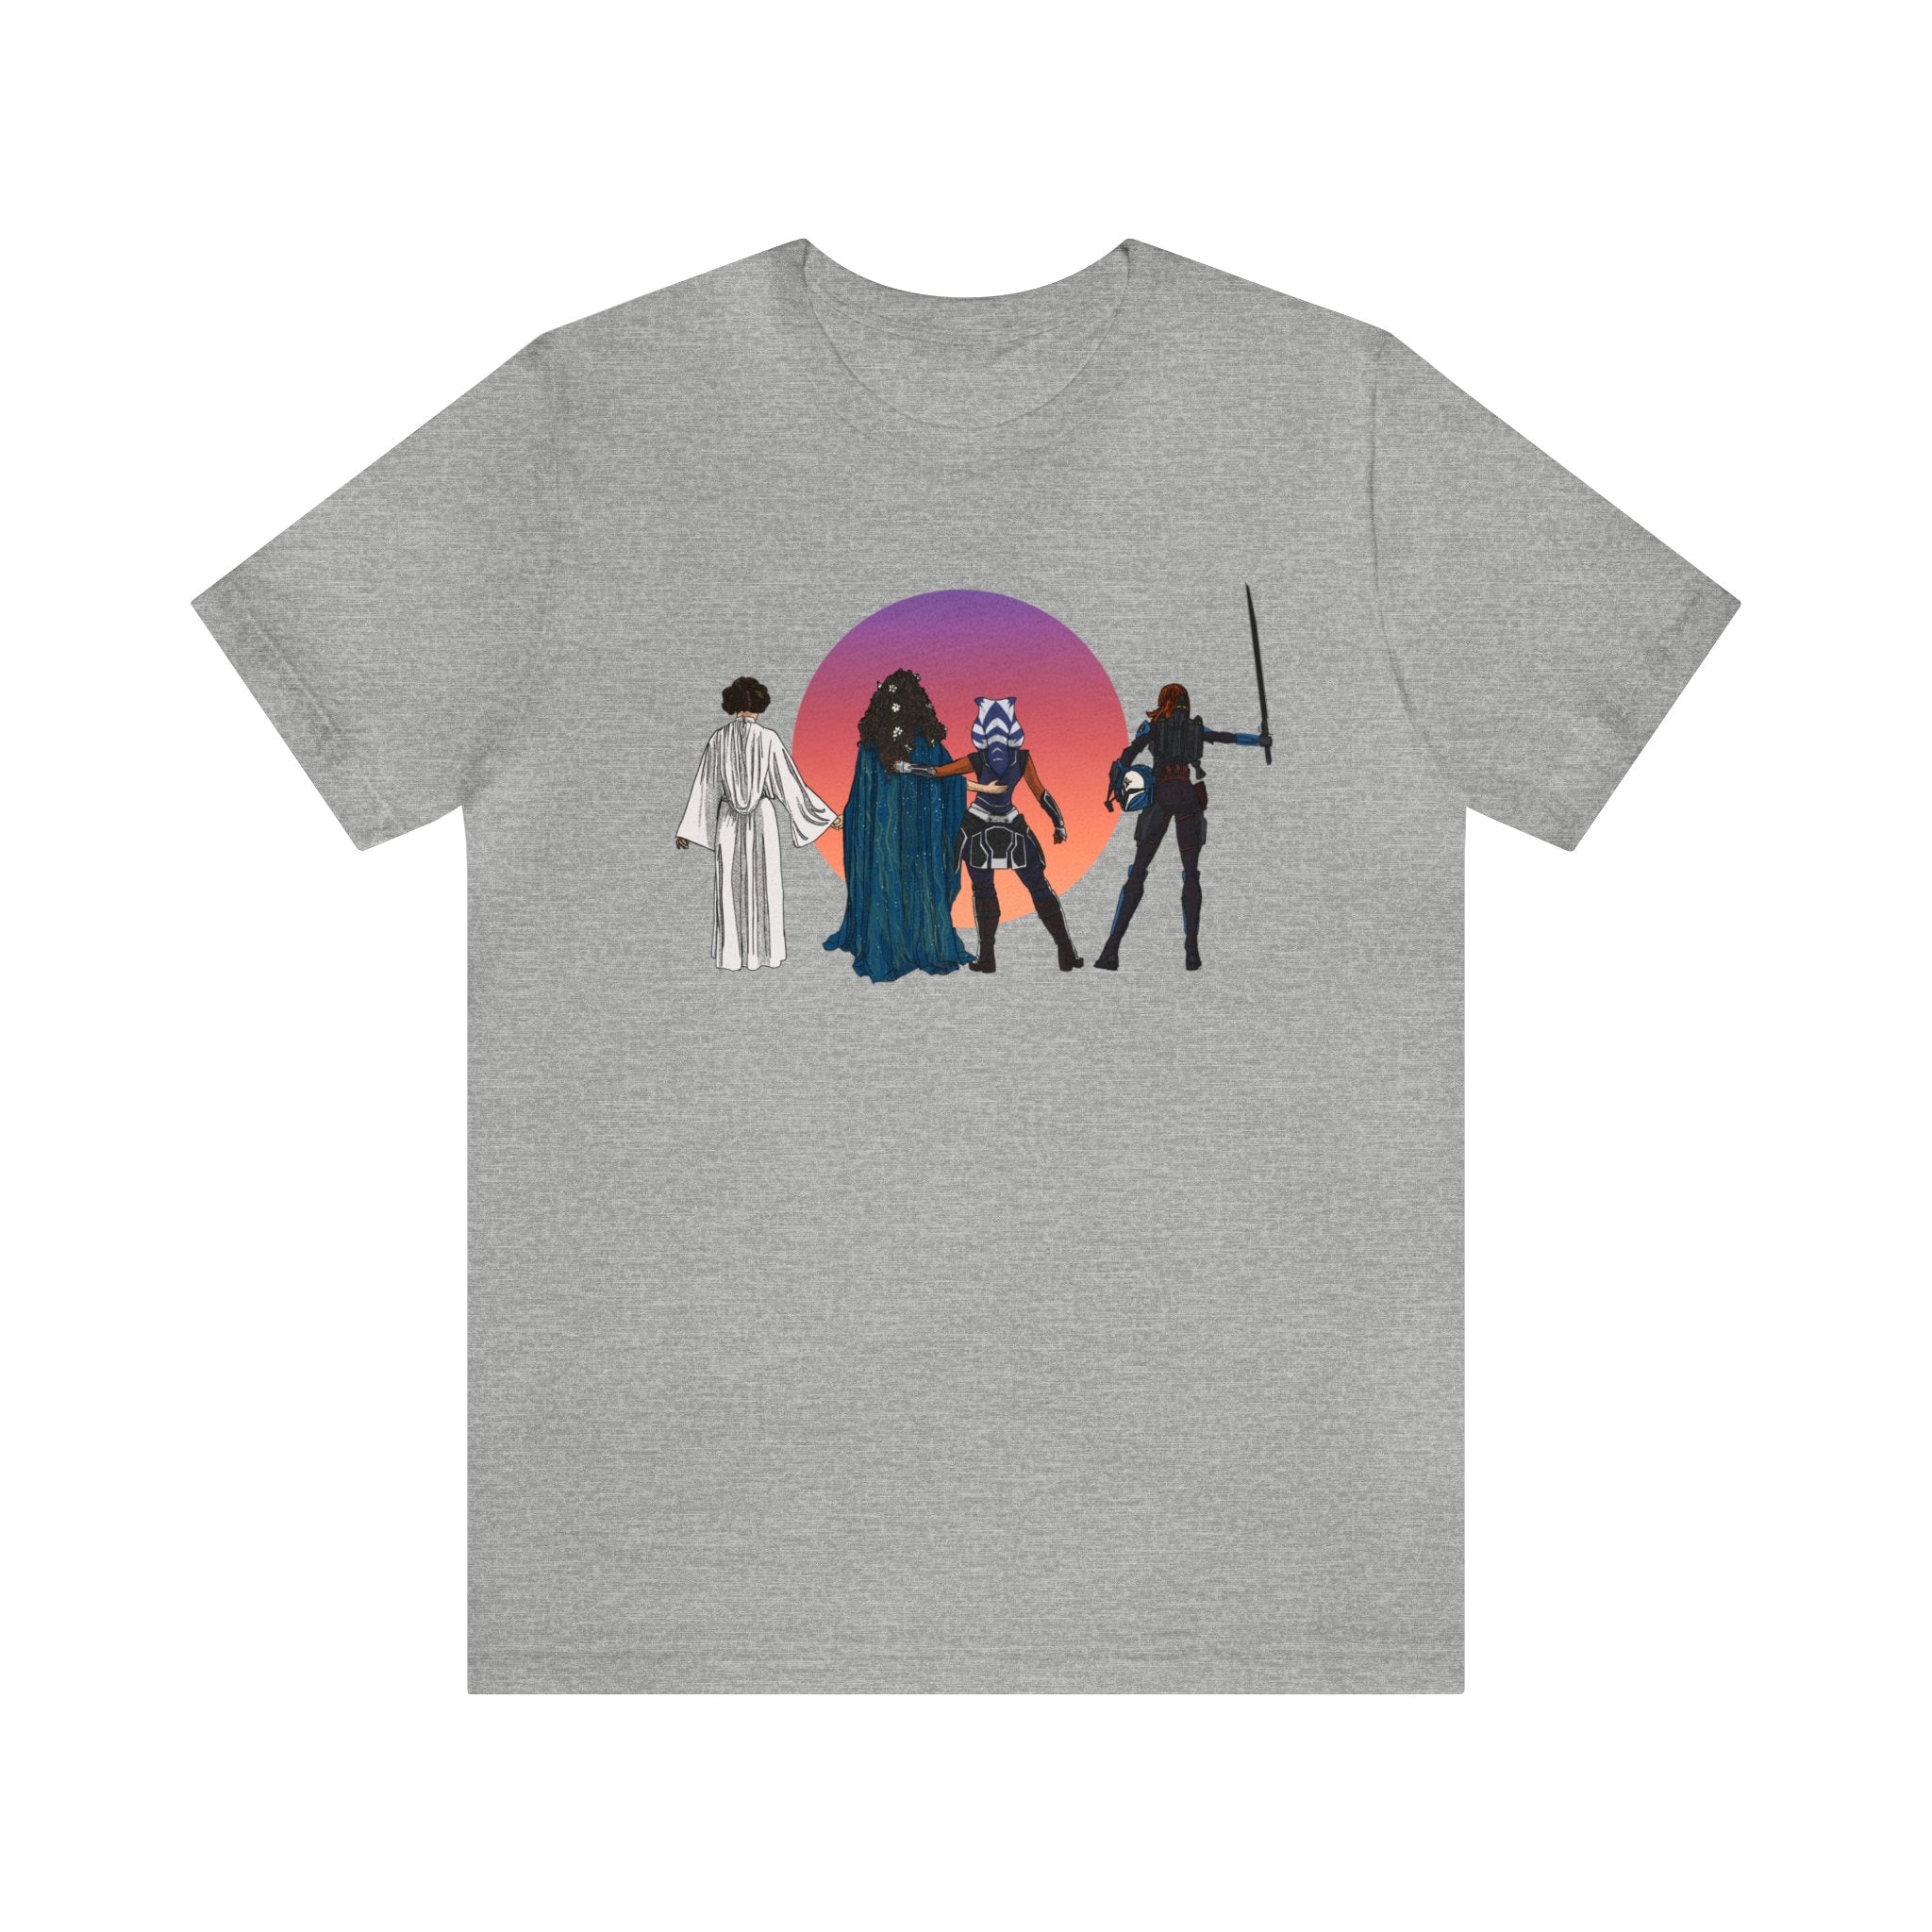 Women of Star Wars (T-shirt)